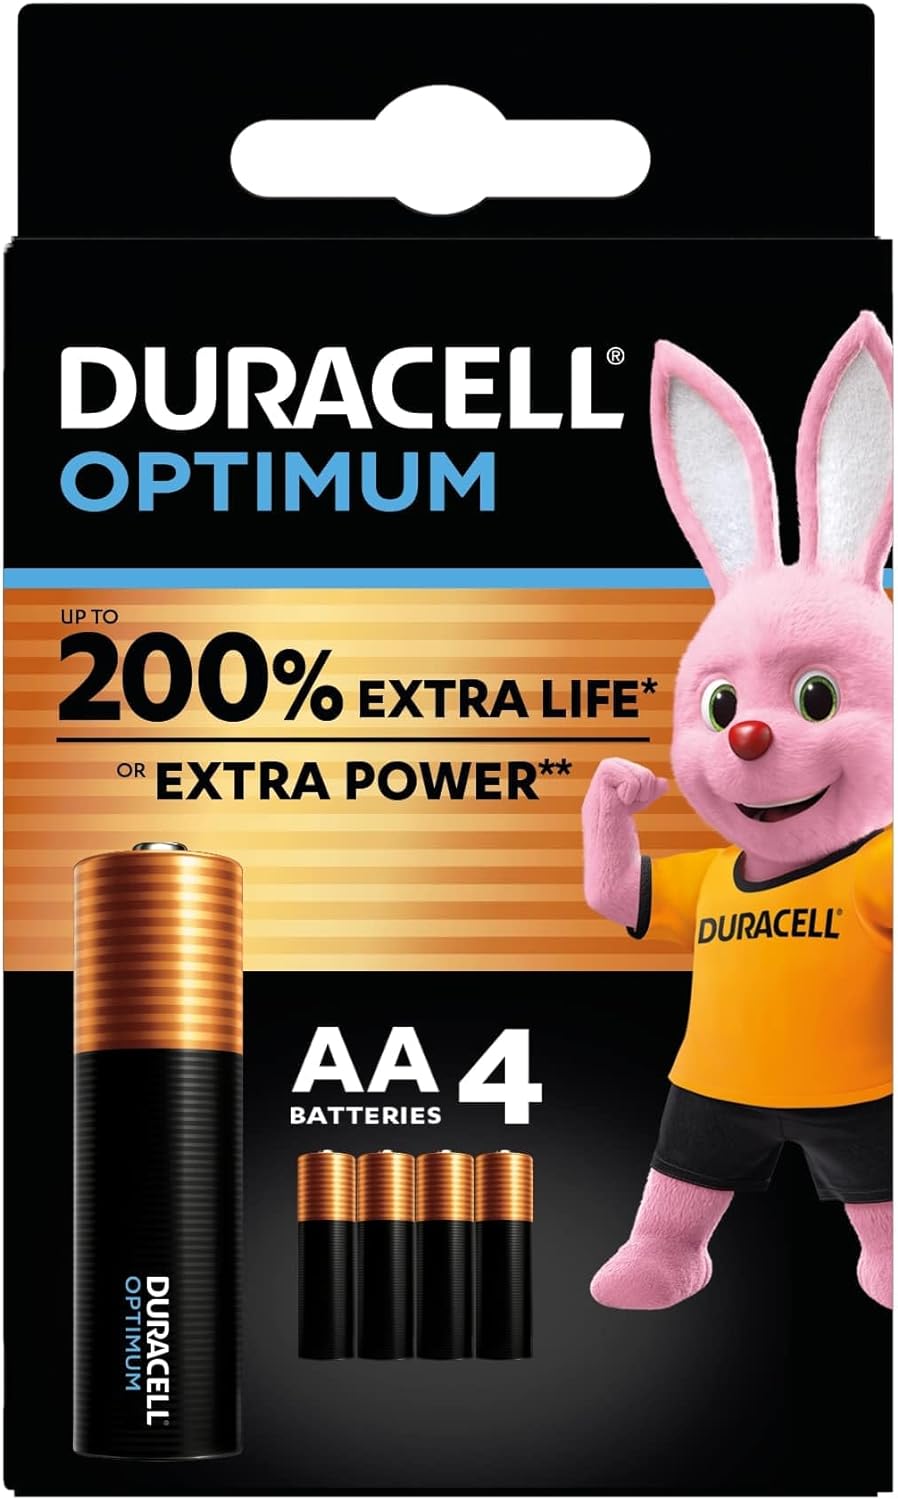 Duracell Optimum AA - pack of 4